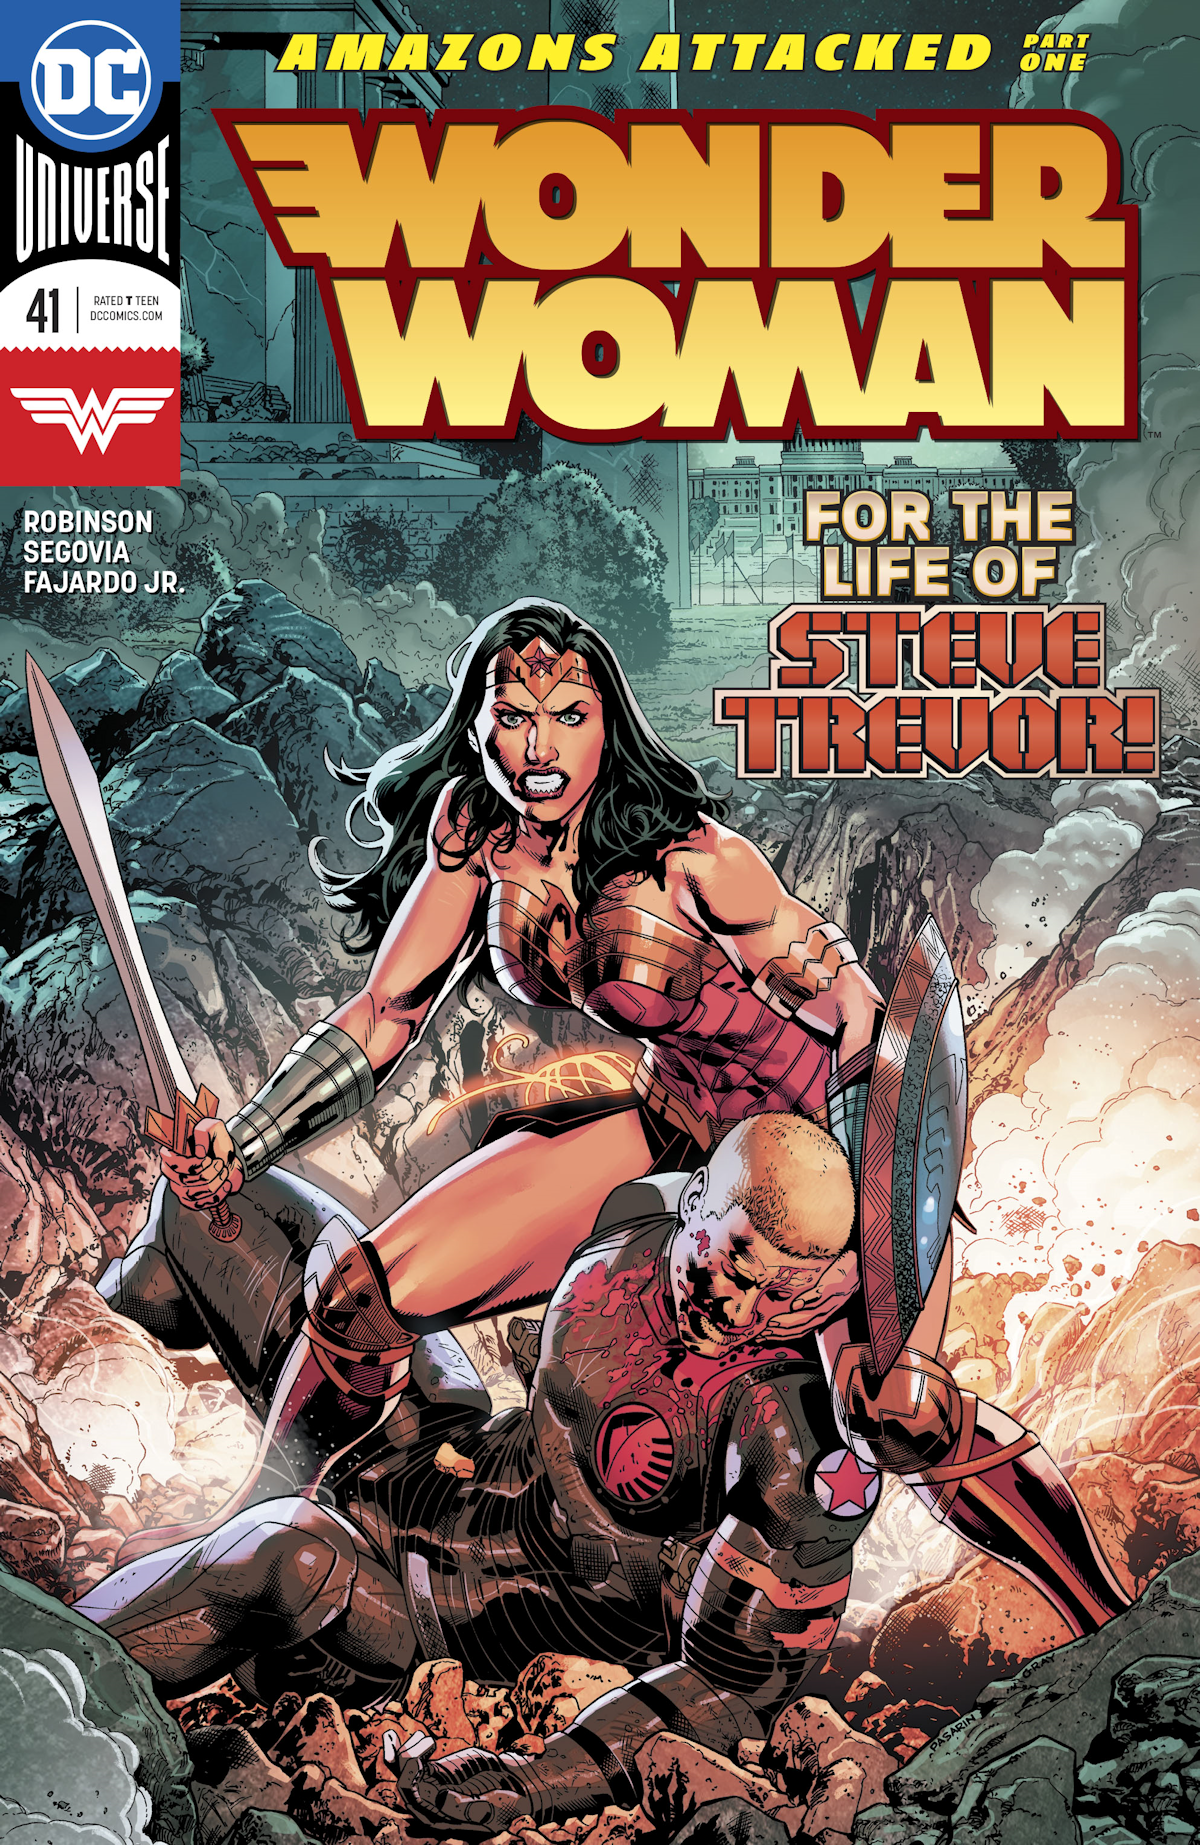 Wonder Woman Vol. 5 41 (Cover A)